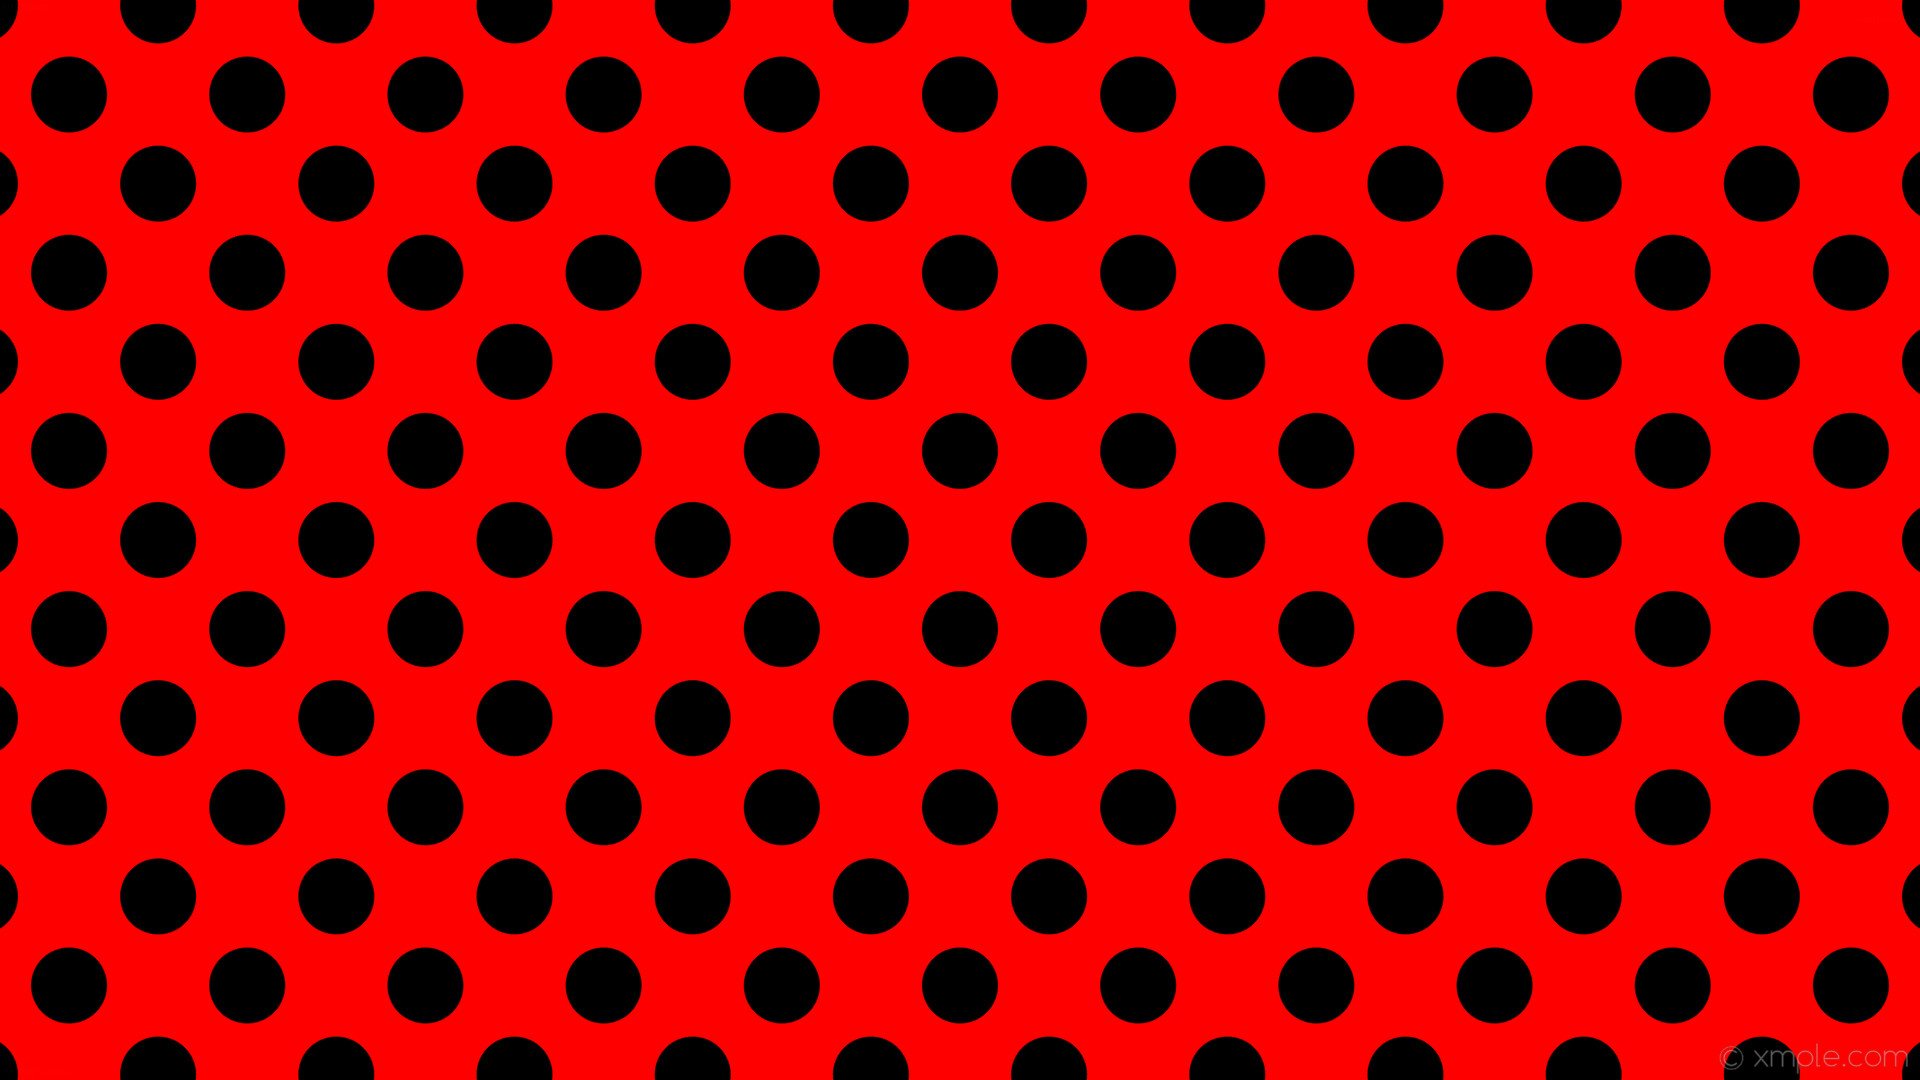 wallpaper red polka black spots dots #ff0000 #000000 225Â° 76px 126px